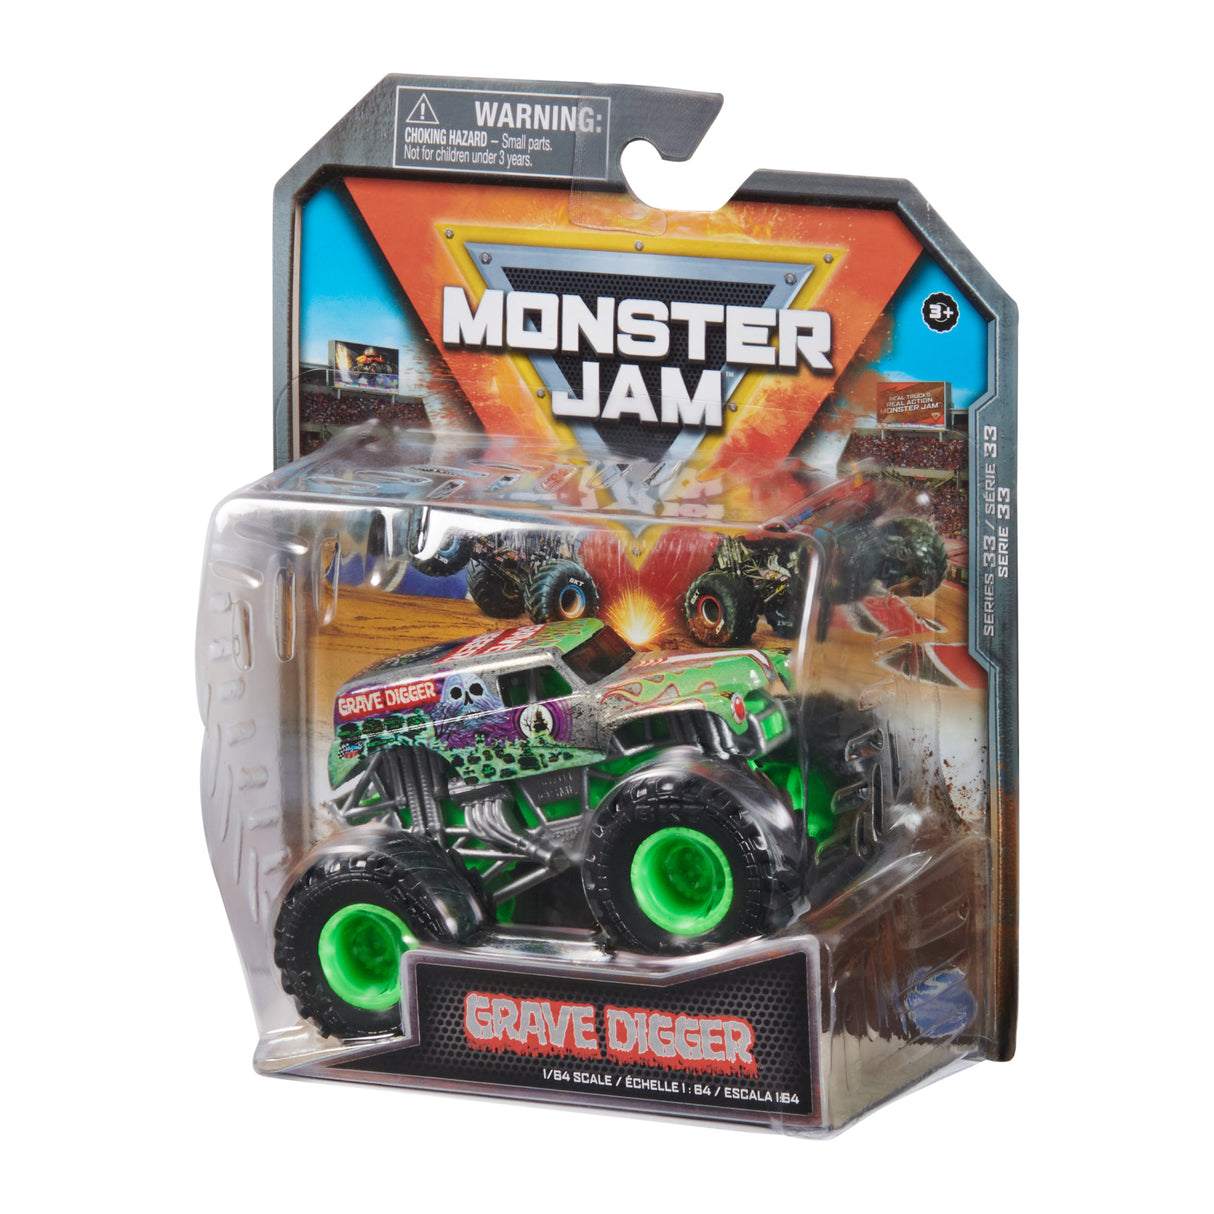 Monster Jam 1:64 Grave Digger Series 33 Die-cast Truck